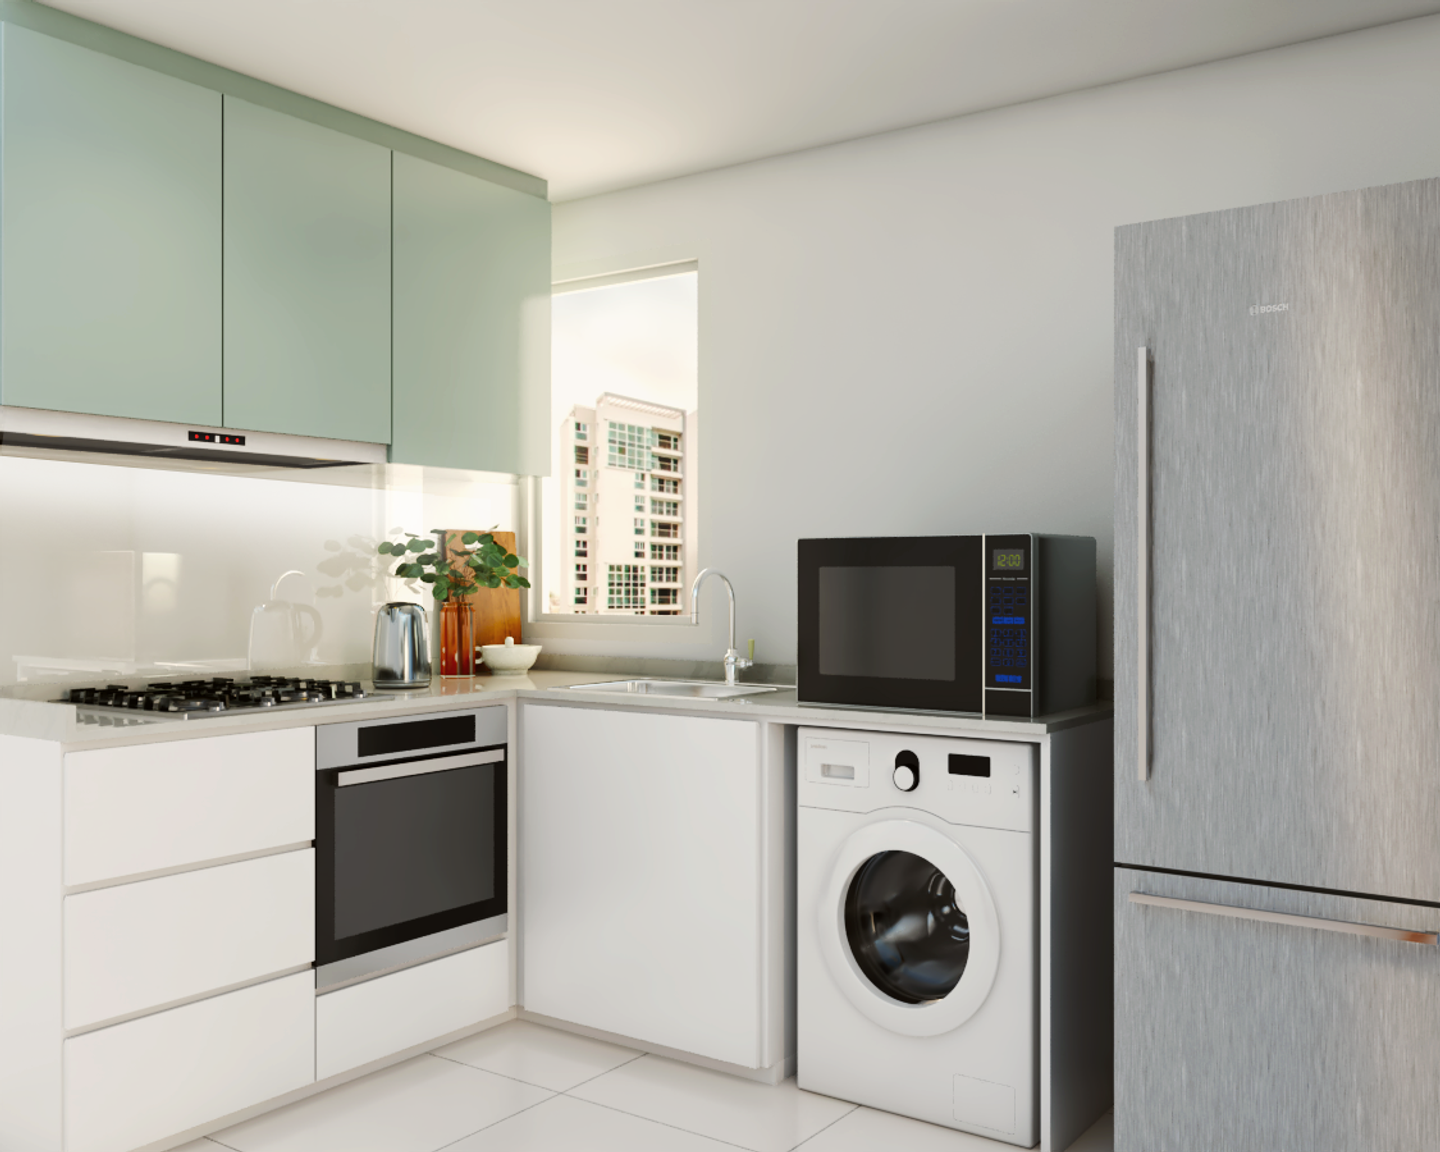 Dual Tone Minimal Kitchen Design with In-Built Appliances - Livspace